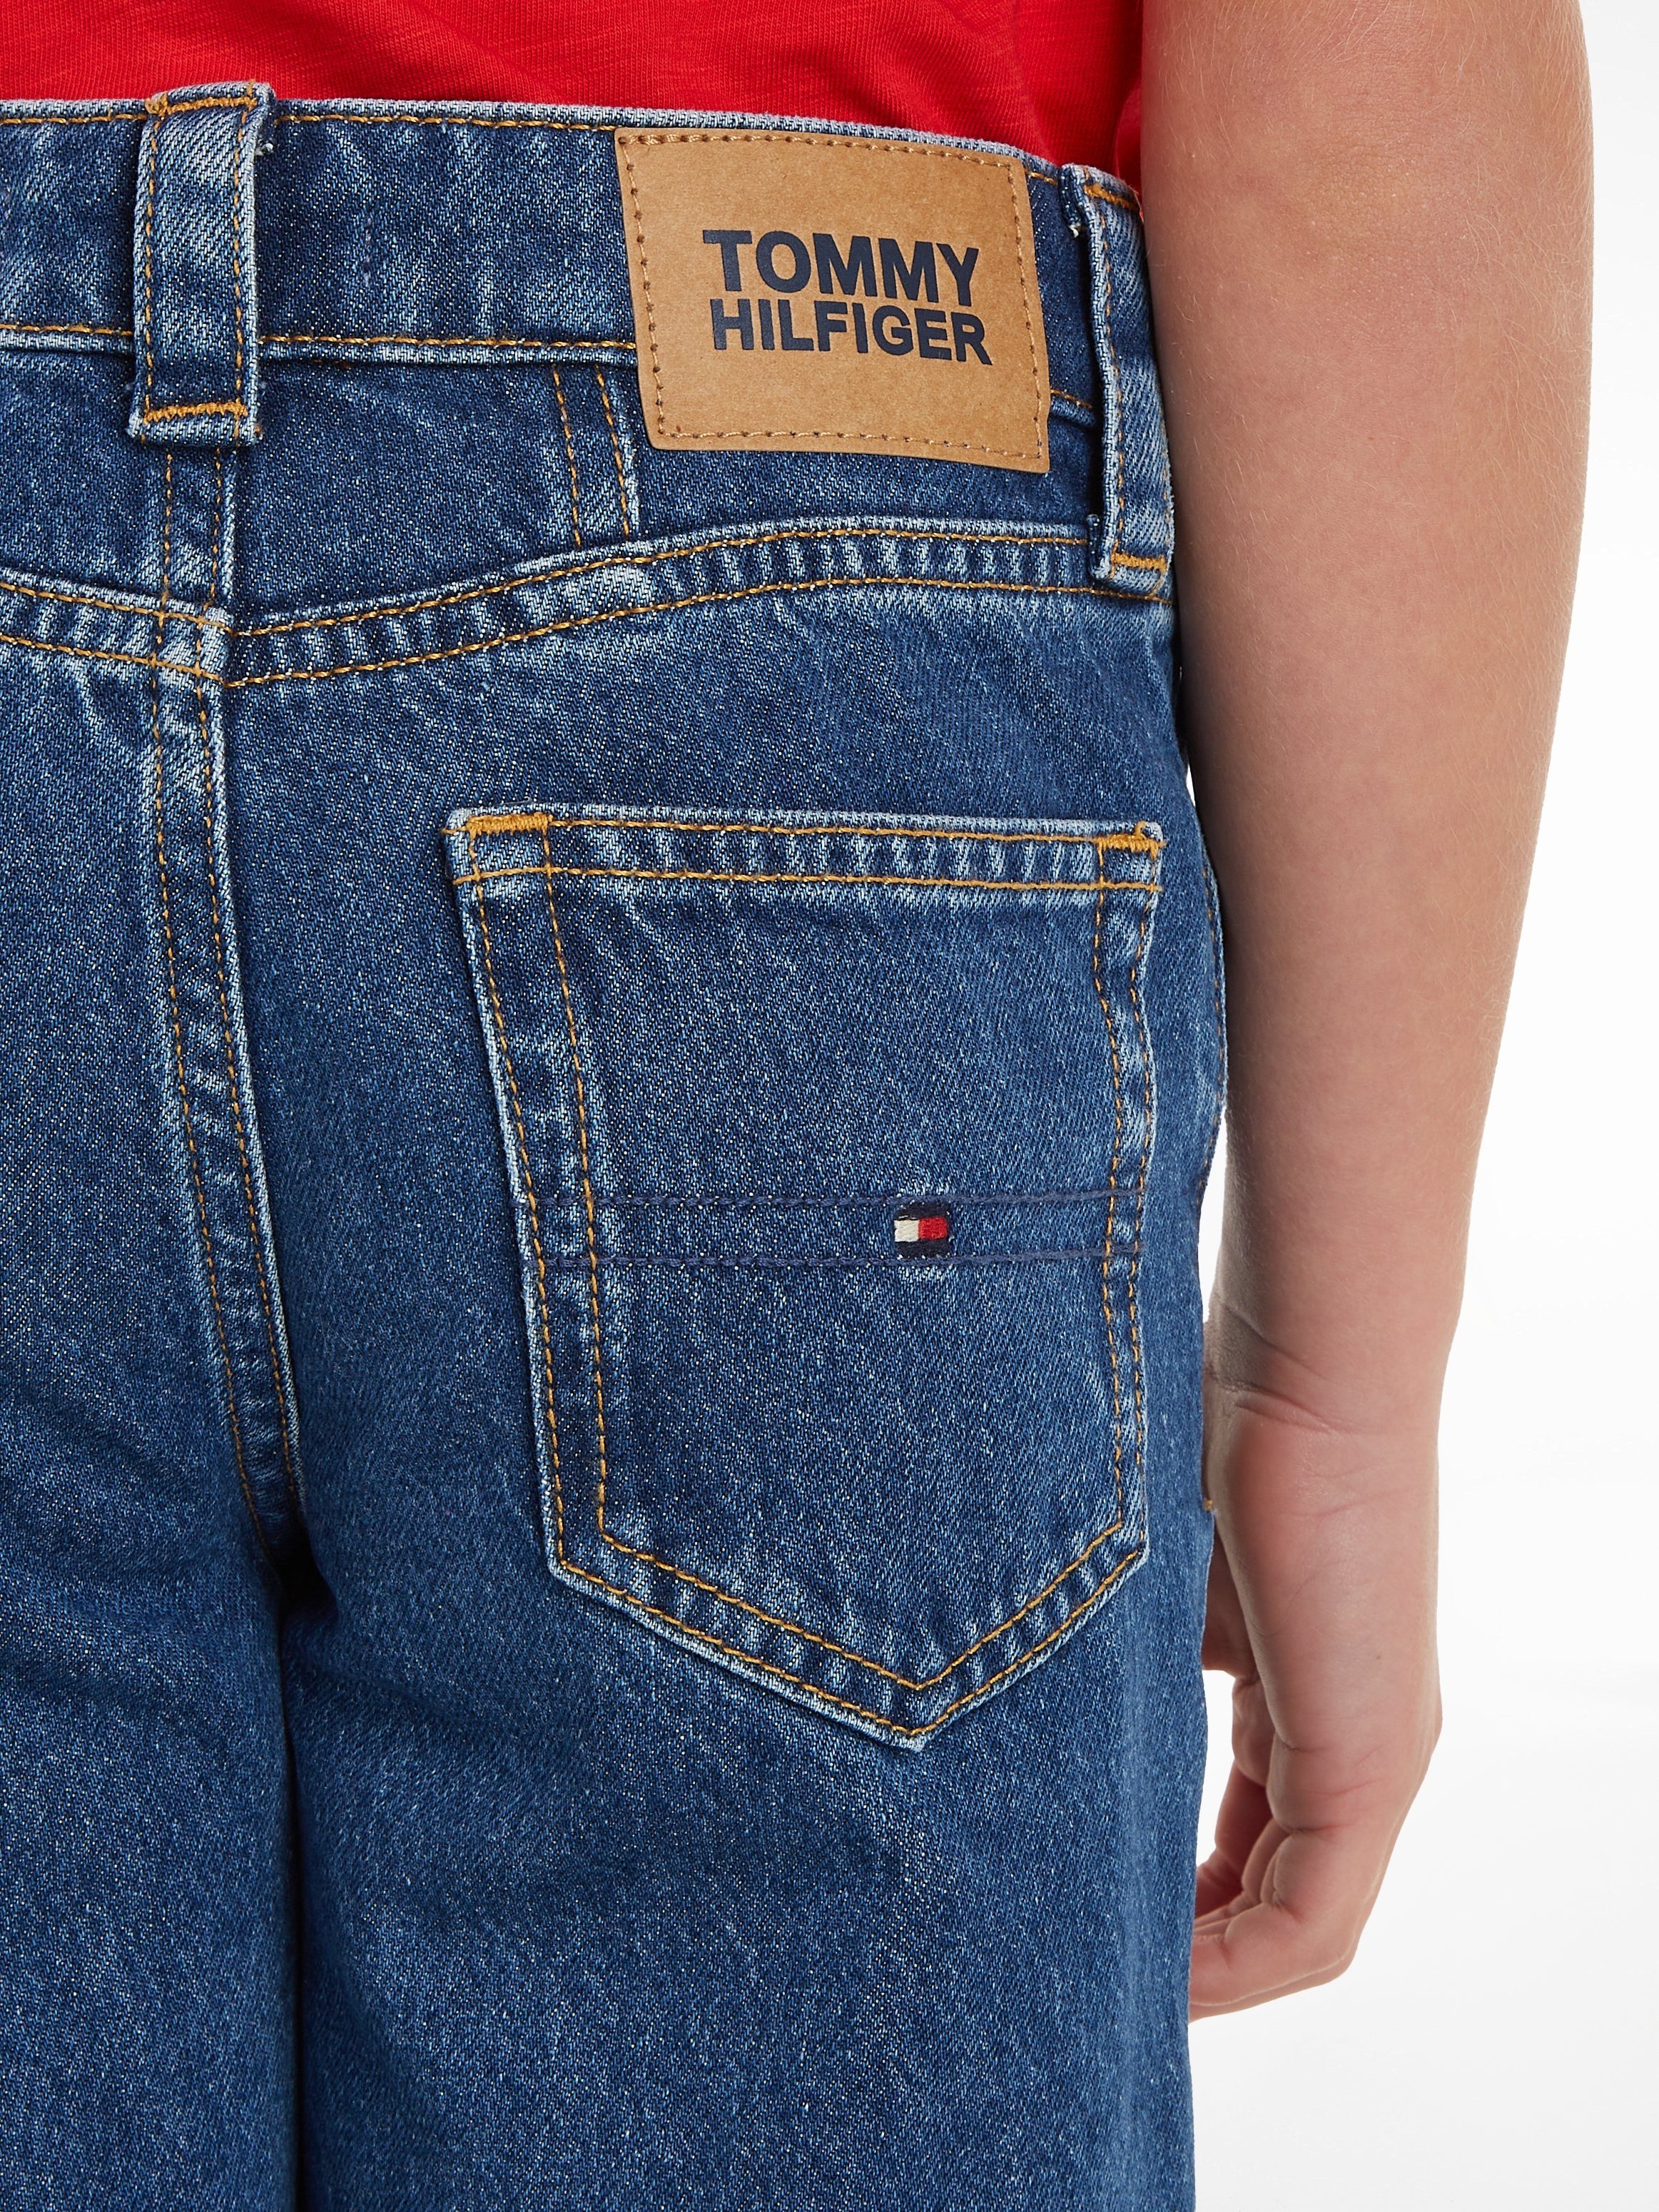 am Kinder Kids Junior BLUE Hilfiger GIRLFRIEND Tommy 5-Pocket-Jeans MiniMe,mit Bund Leder-Brandlabel hinteren MID